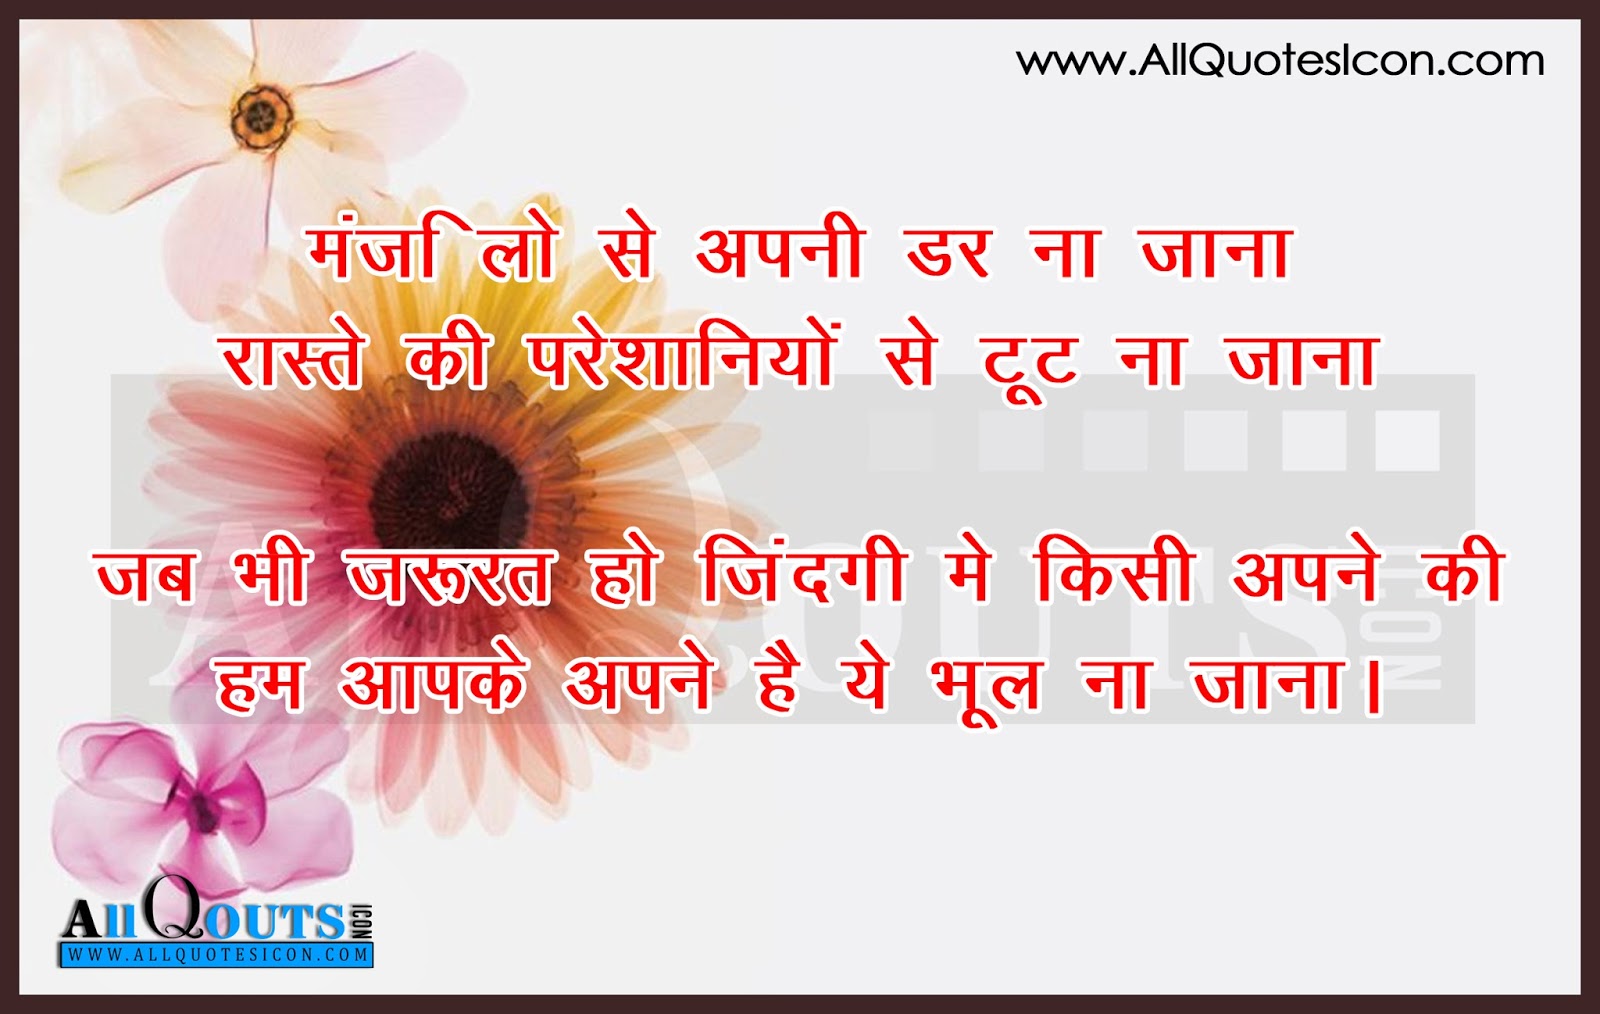 Hindi Shayari Images Wallpapers Pictures Photos - Best Romantic Quotes In Hindi . - HD Wallpaper 